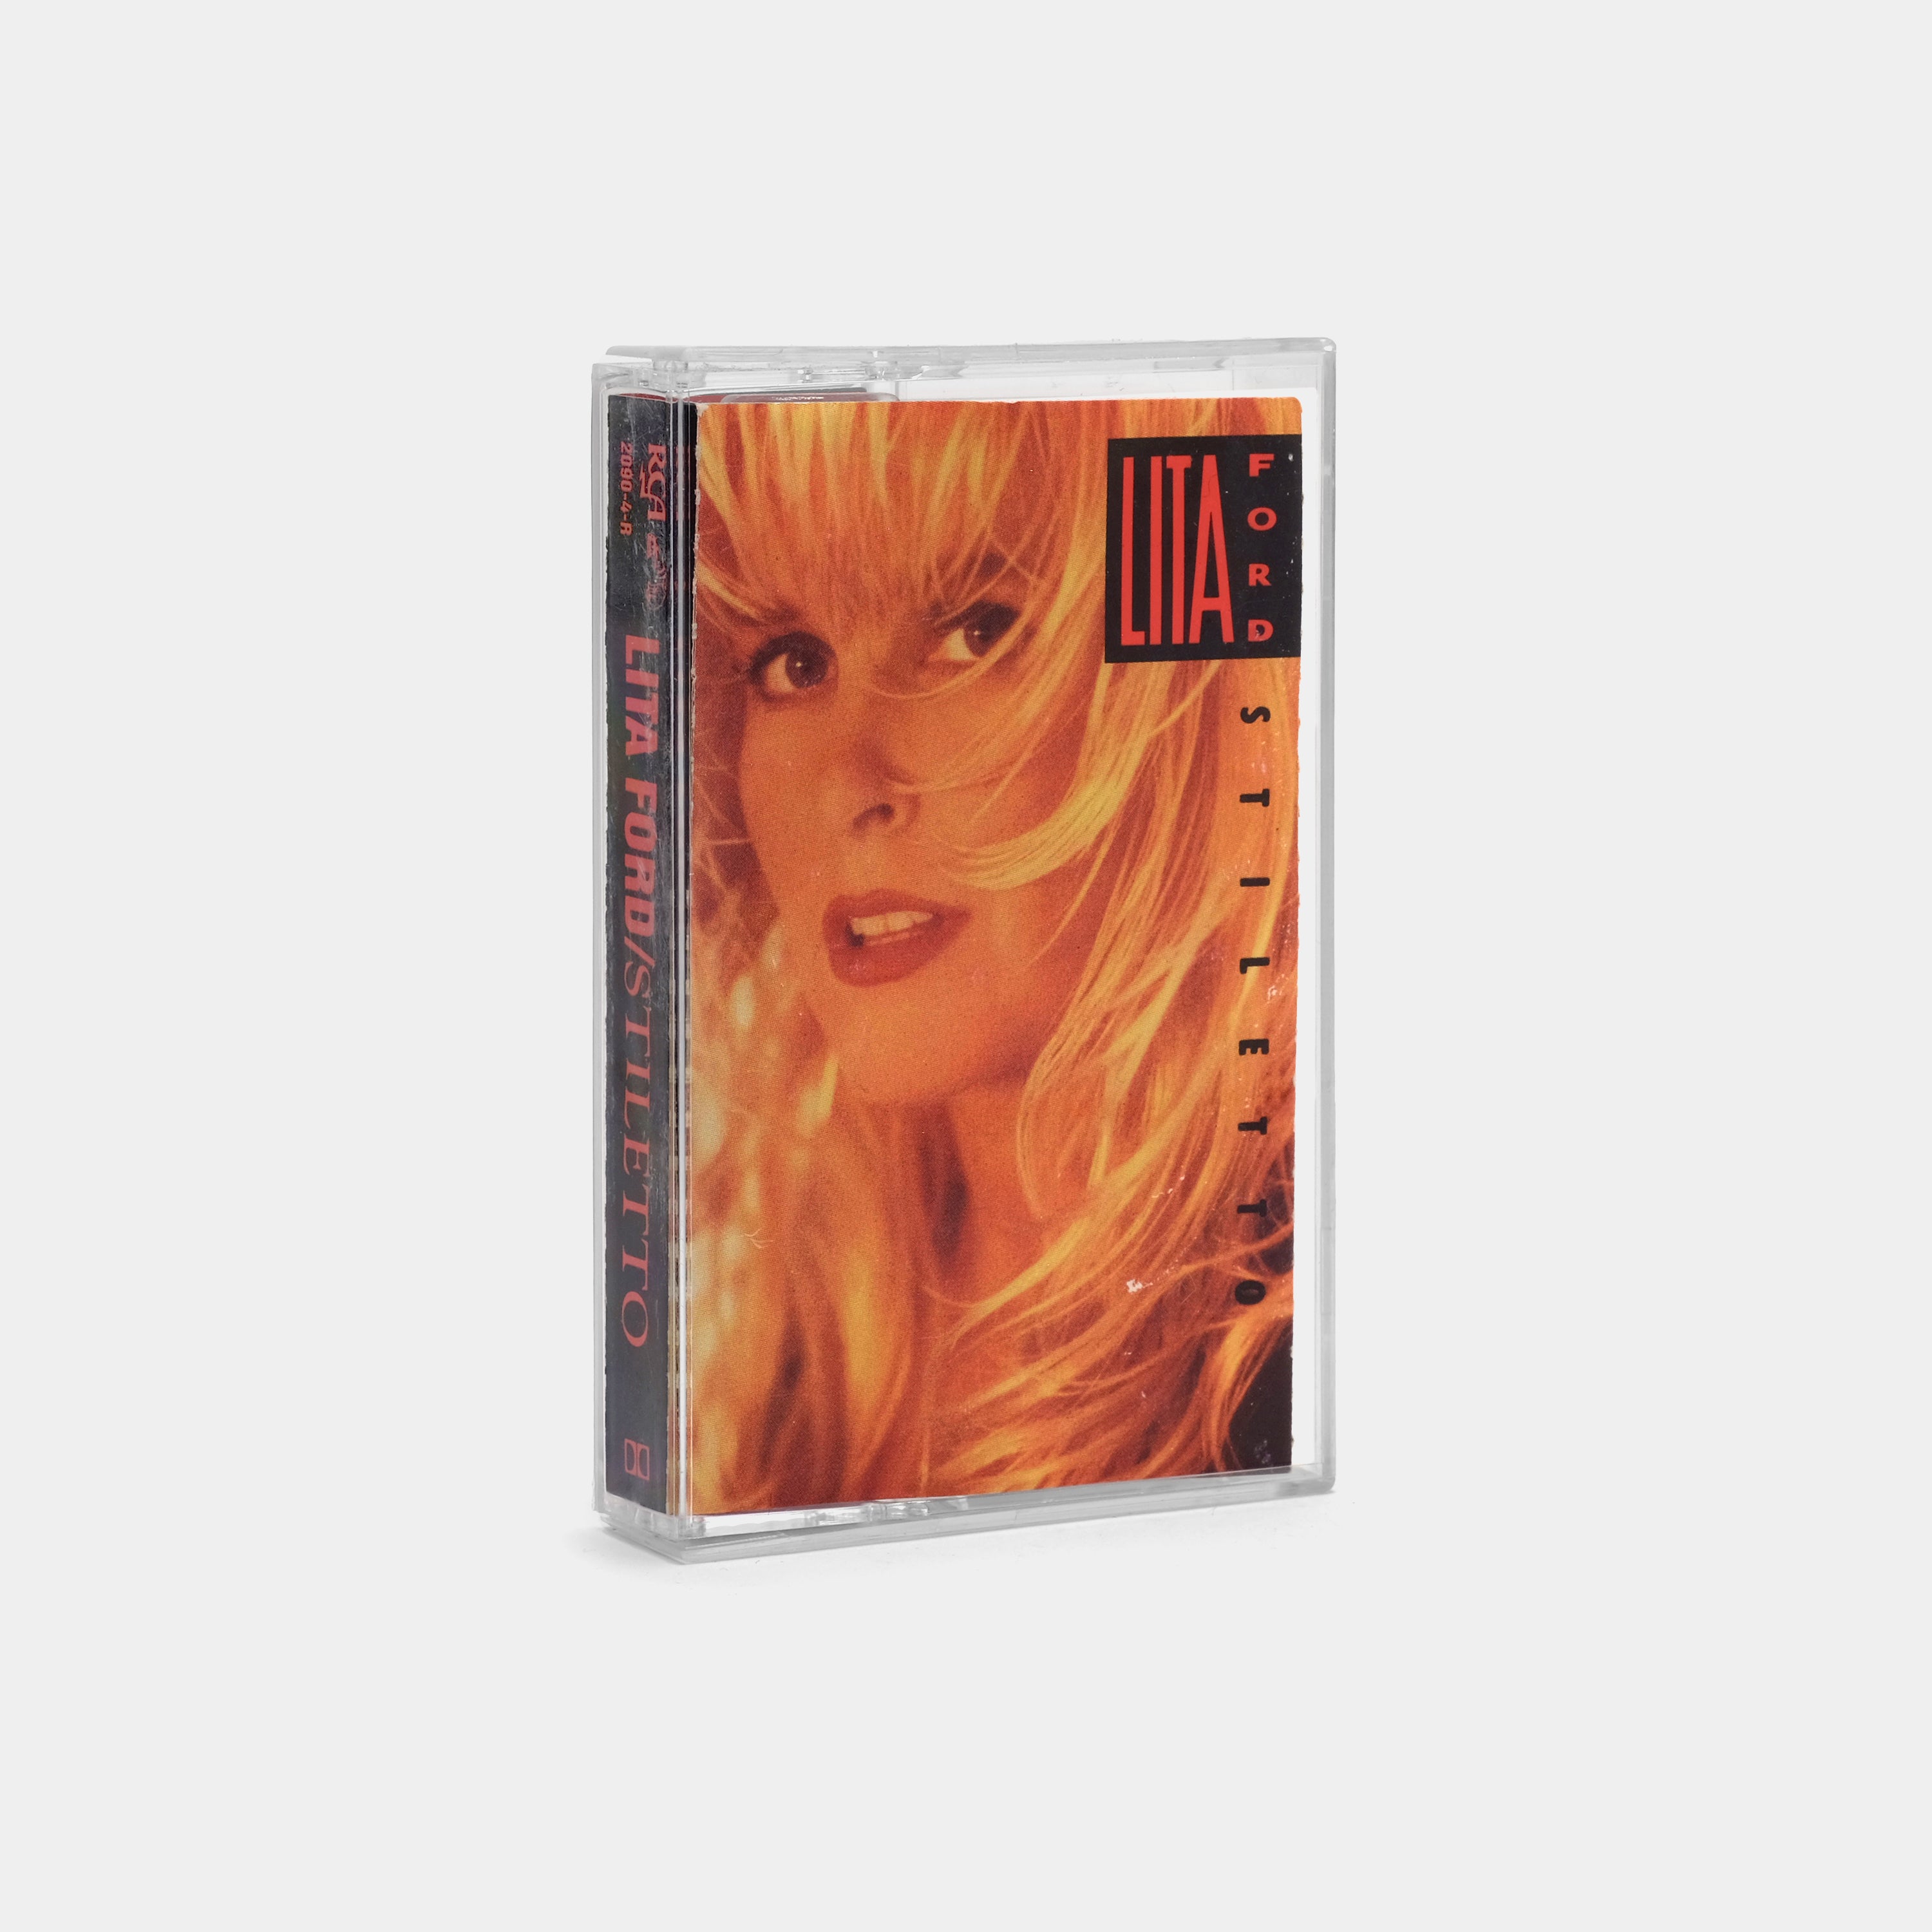 Lita Ford - Stiletto Cassette Tape